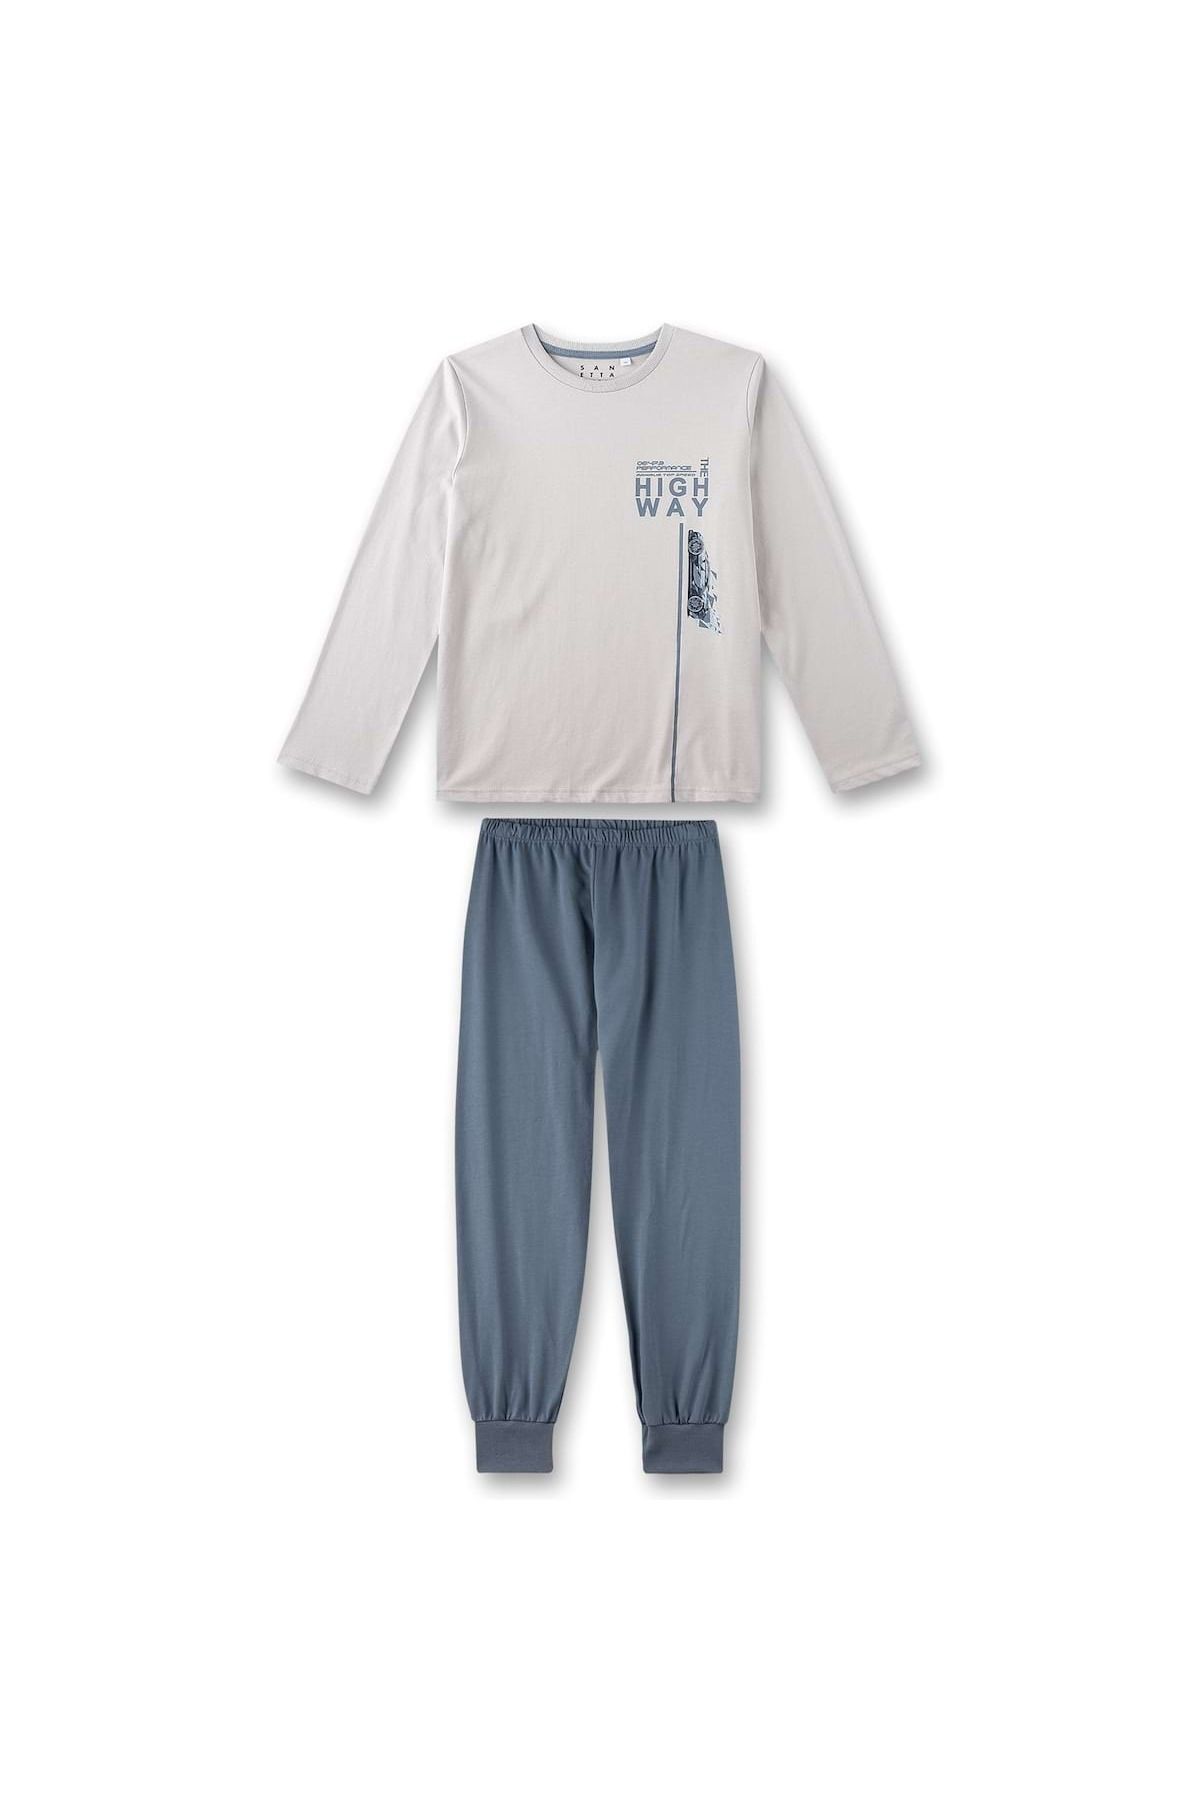 lang, Jungen Sanetta Schlafanzug Teenager, Pyjama, Set Baumwolle - Trendyol - Kinder, 2-tlg.